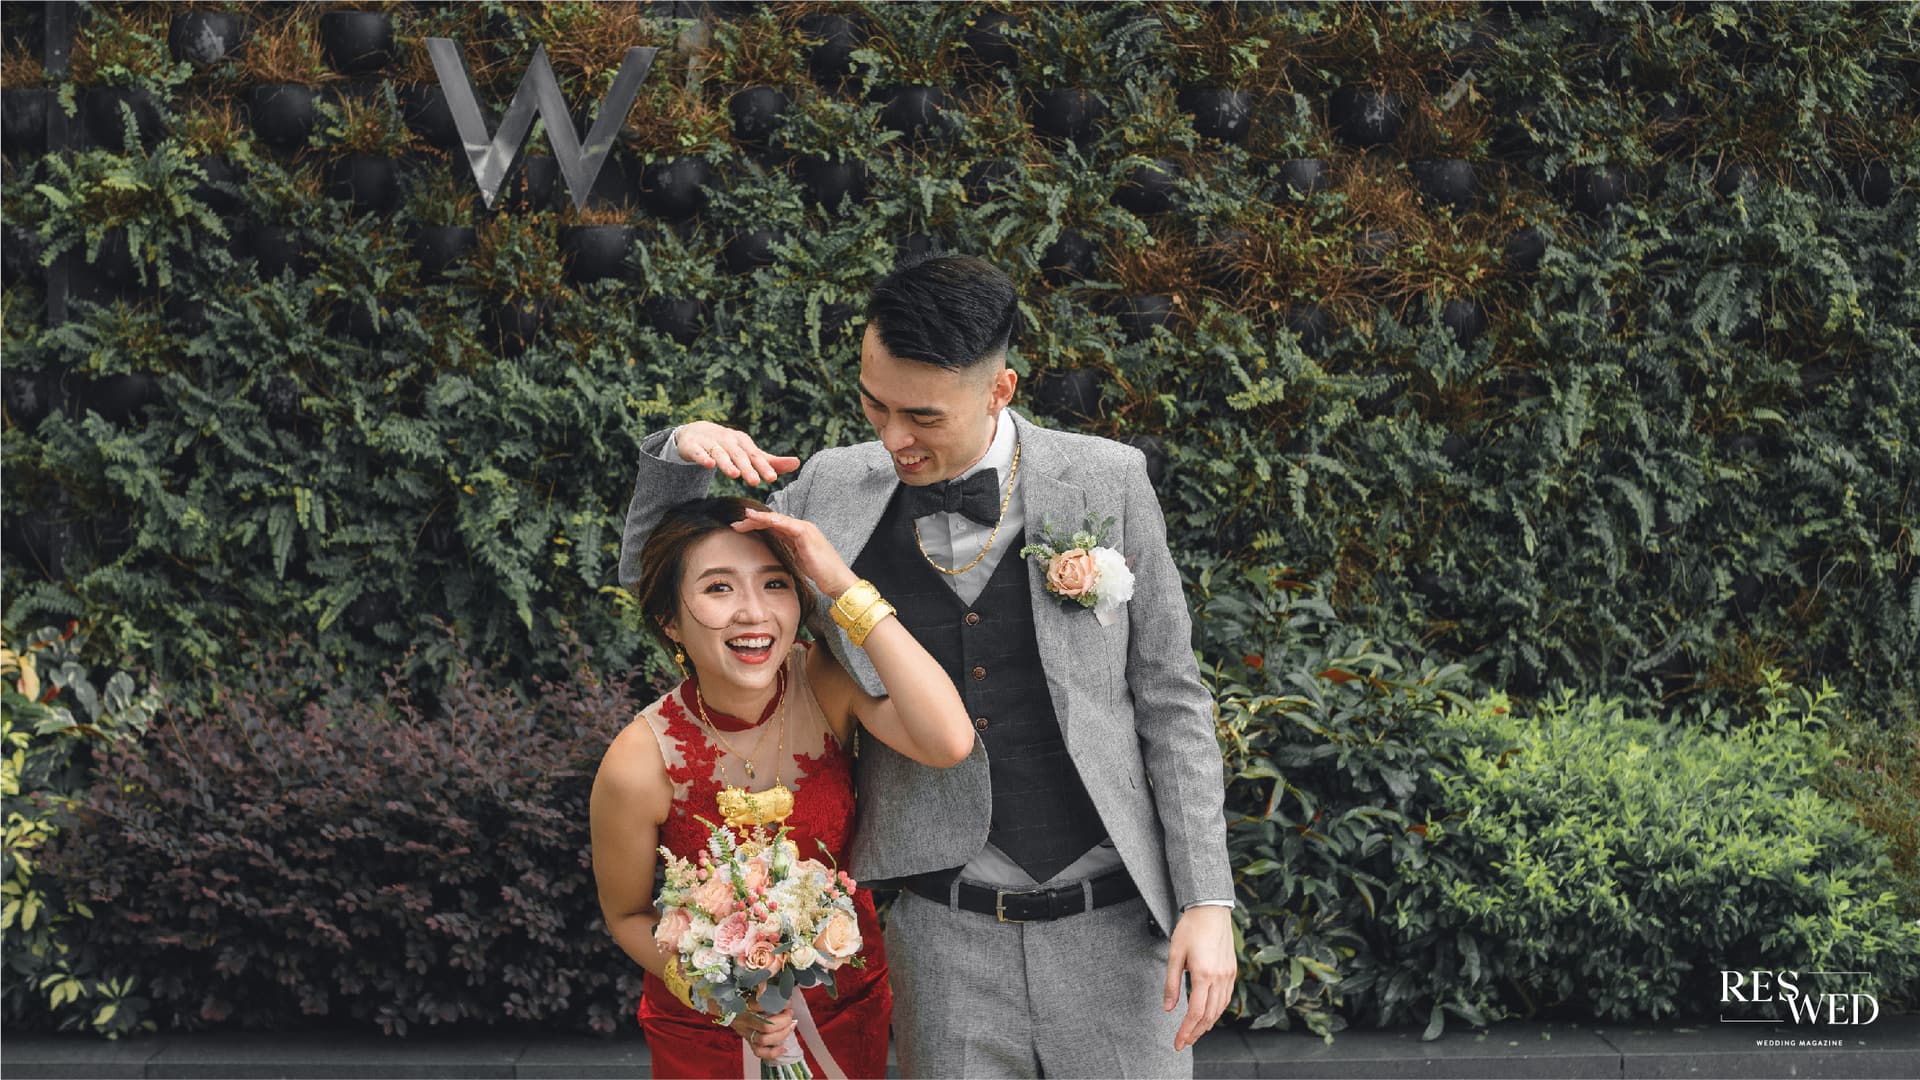 CLOK WEDDING VIDEO：默默為新人紀錄婚禮點滴的「説書先生」